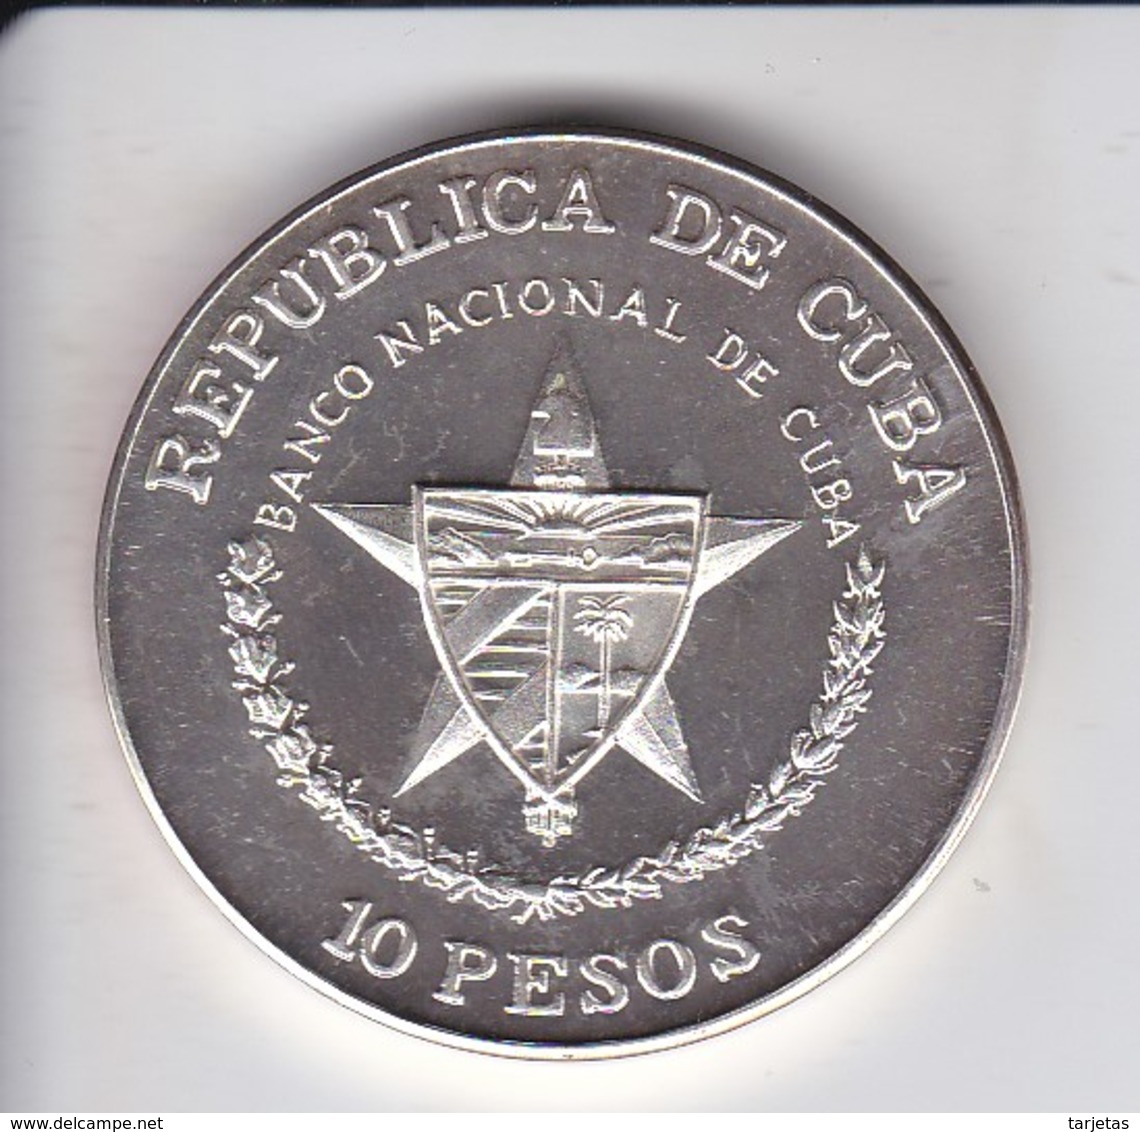 MONEDA DE PLATA DE CUBA DE 10 PESOS AÑO 1989 EN MARCHA HACIA LA VICTORIA - Cuba